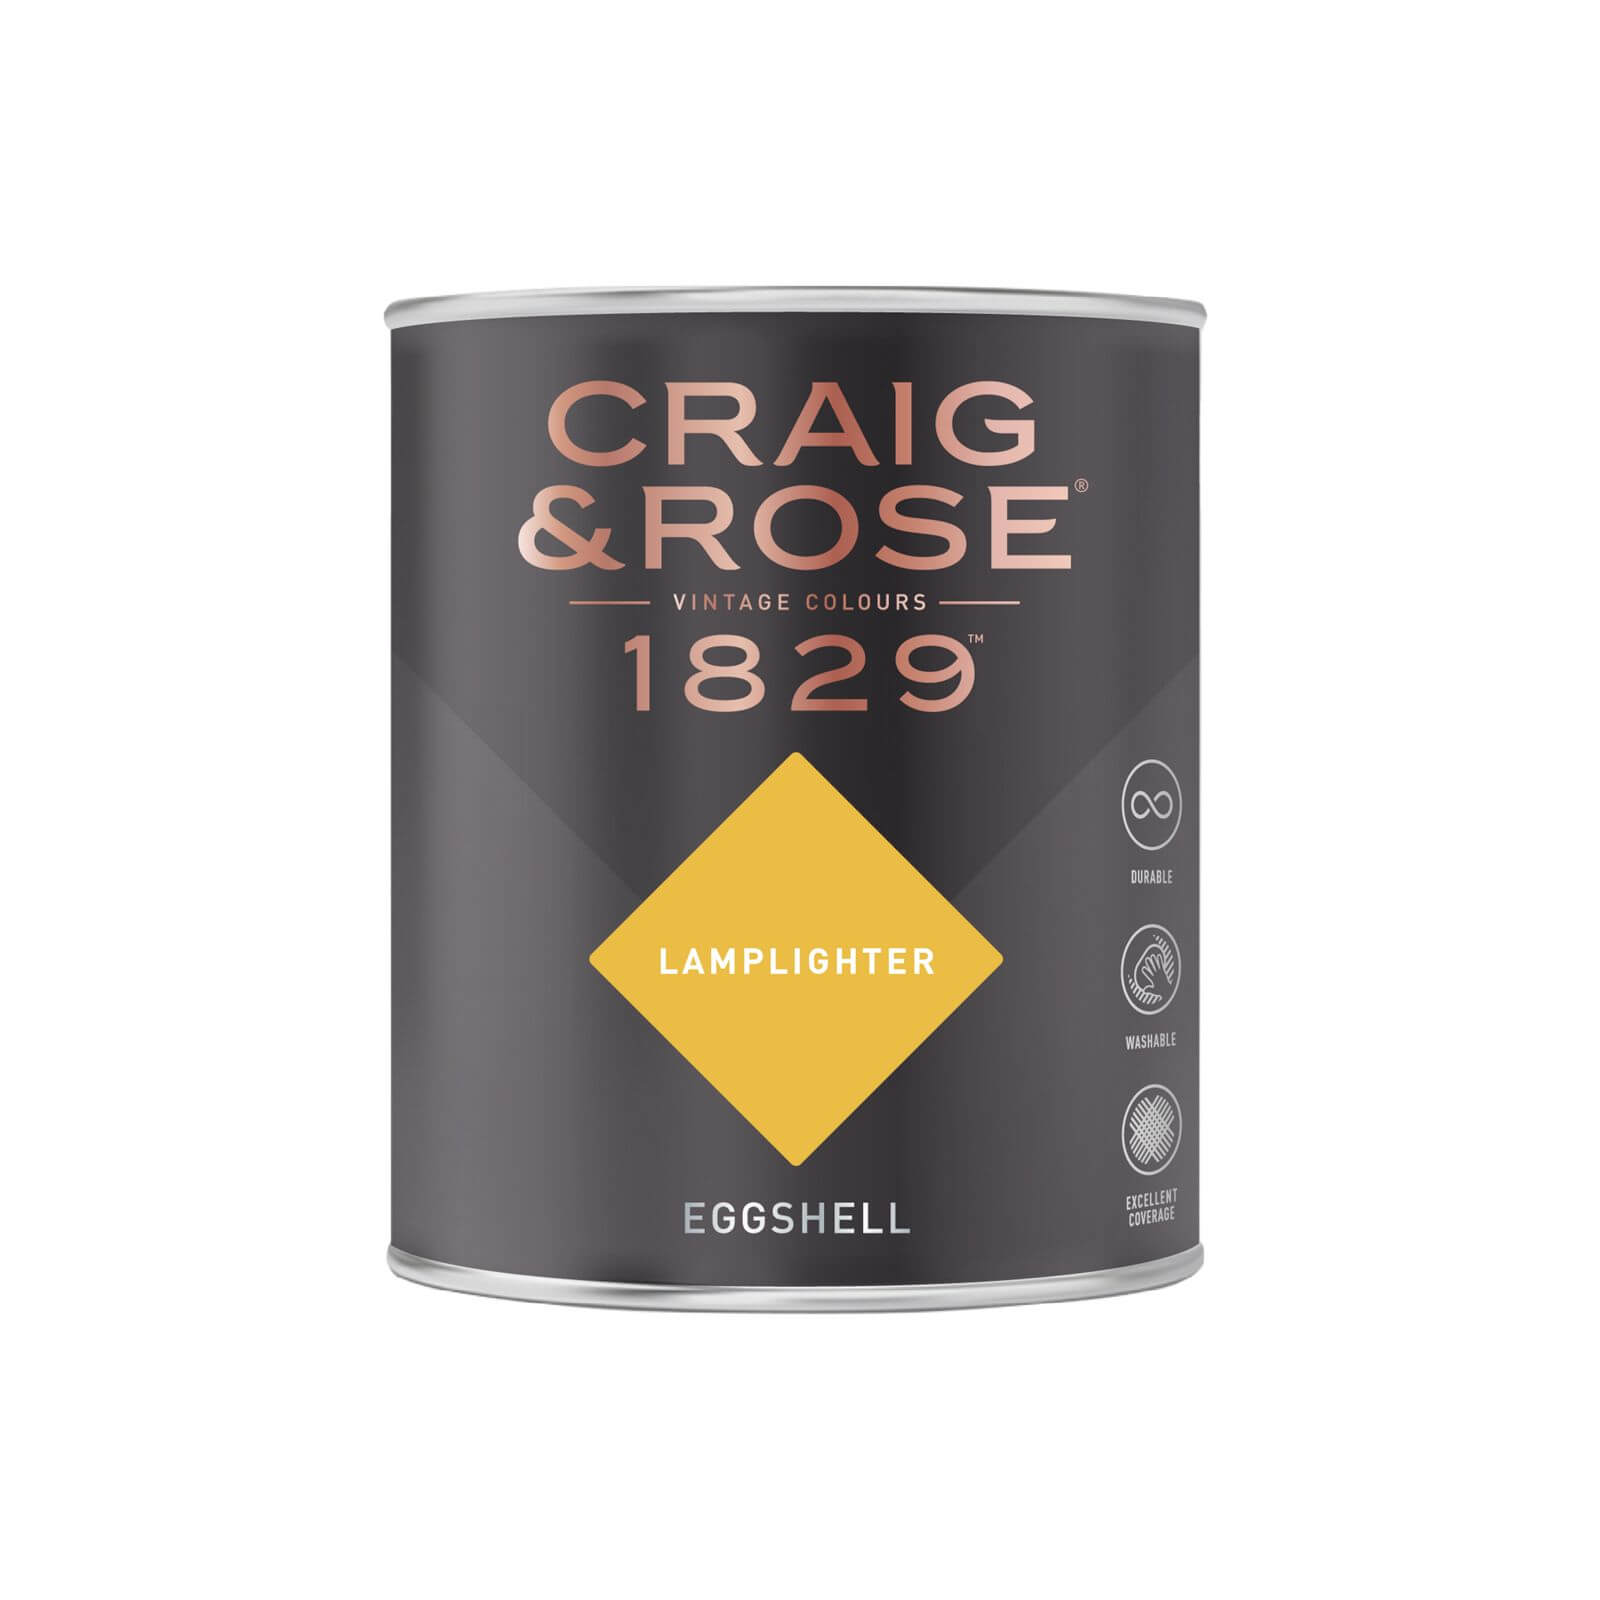 Craig & Rose 1829 Eggshell Paint Lamplighter - 750ml